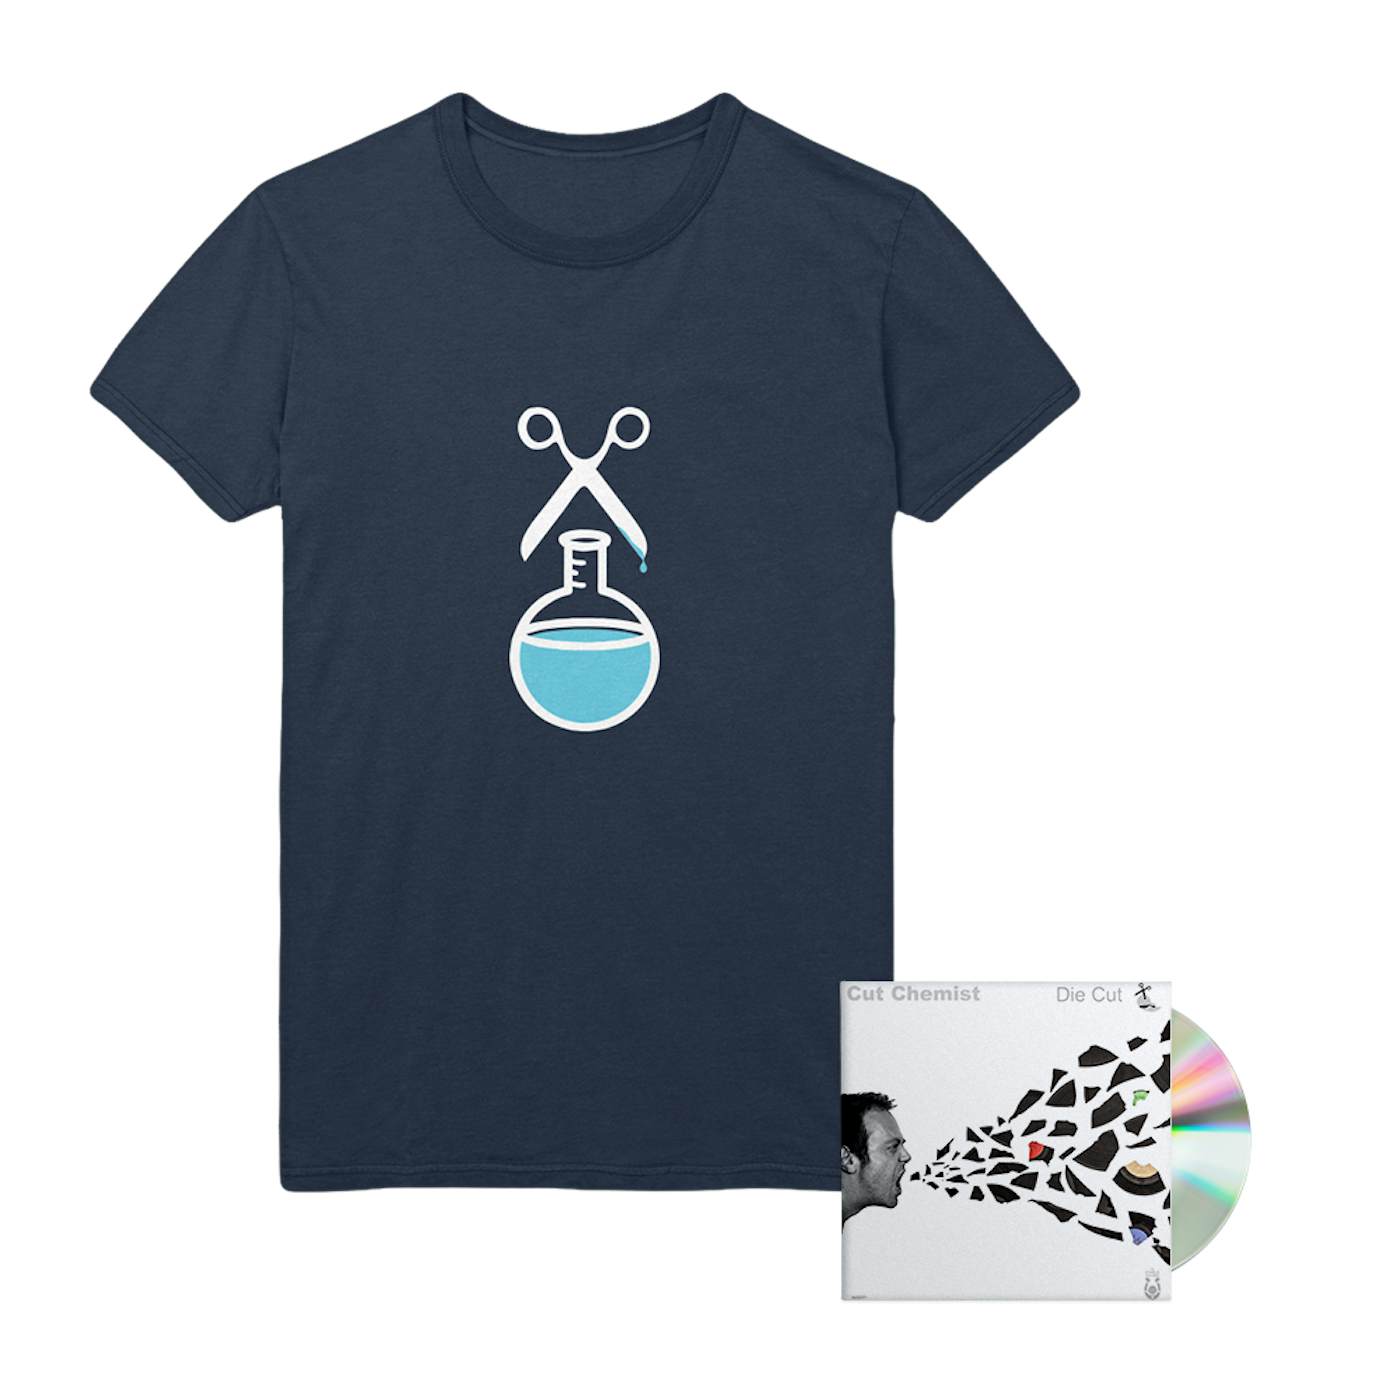 Cut Chemist Logo T-Shirt + Die Cut CD Bundle